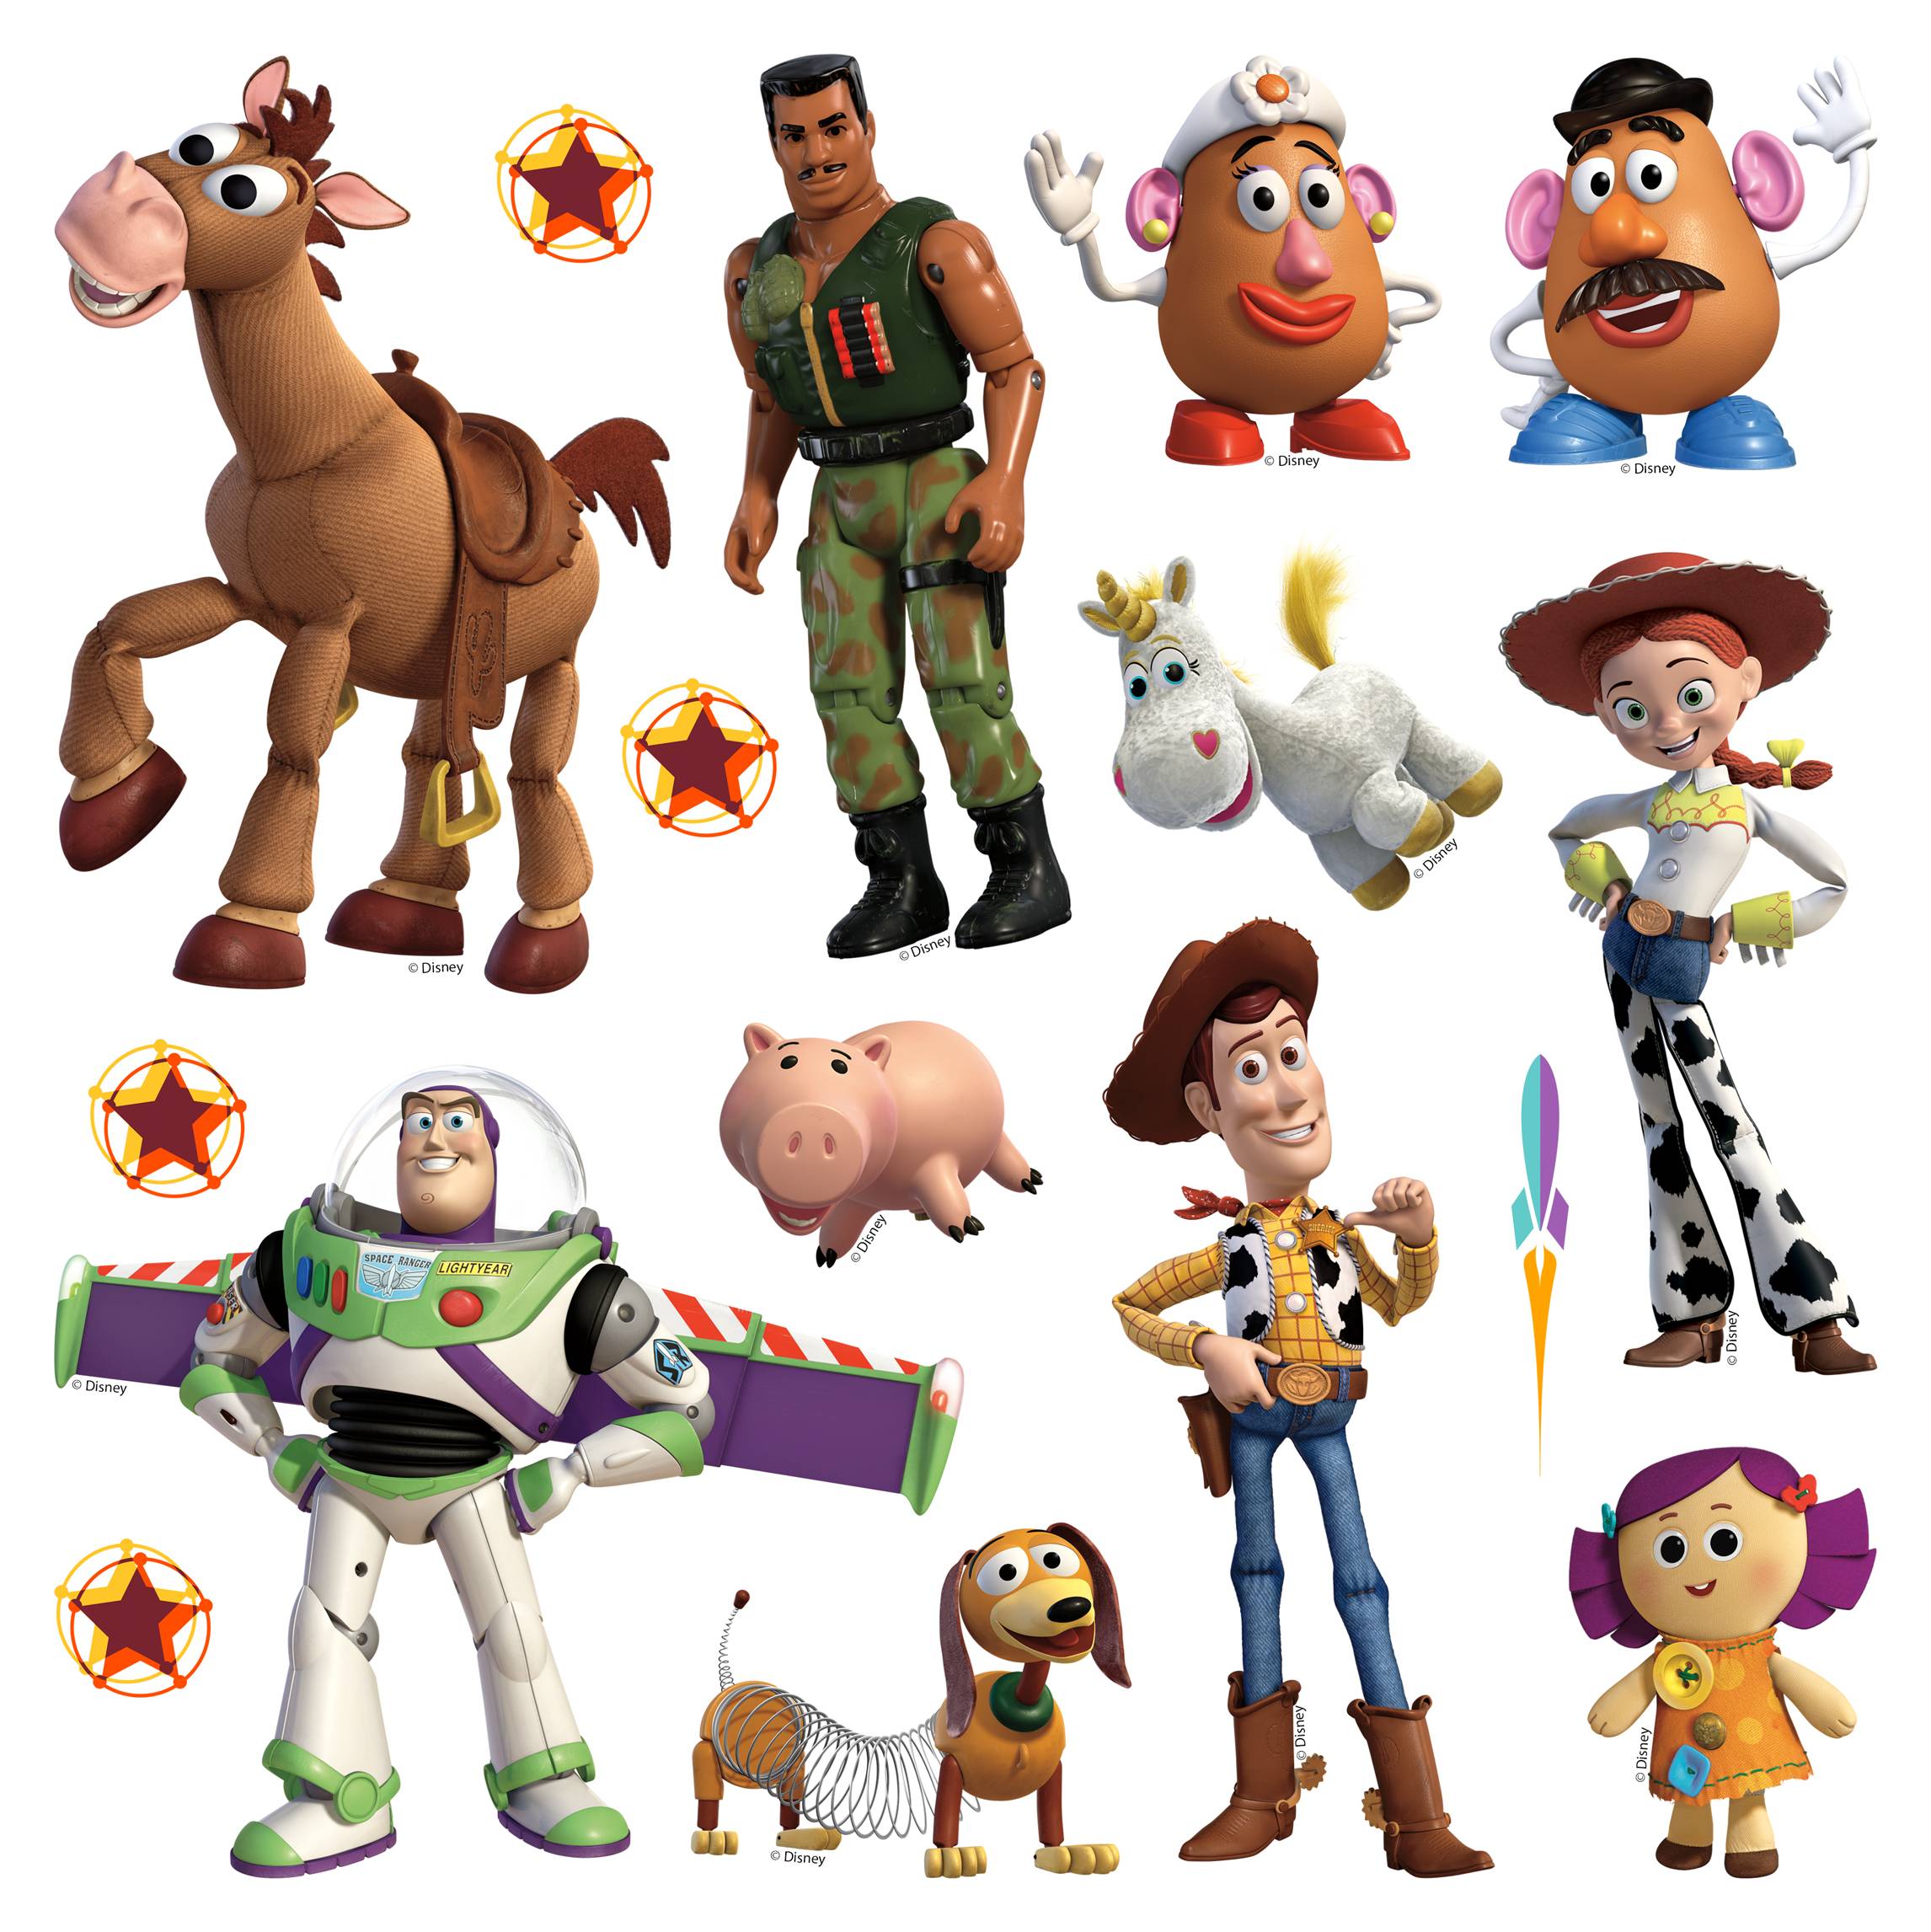 Wandtattoo Toy Story kaufen home24 